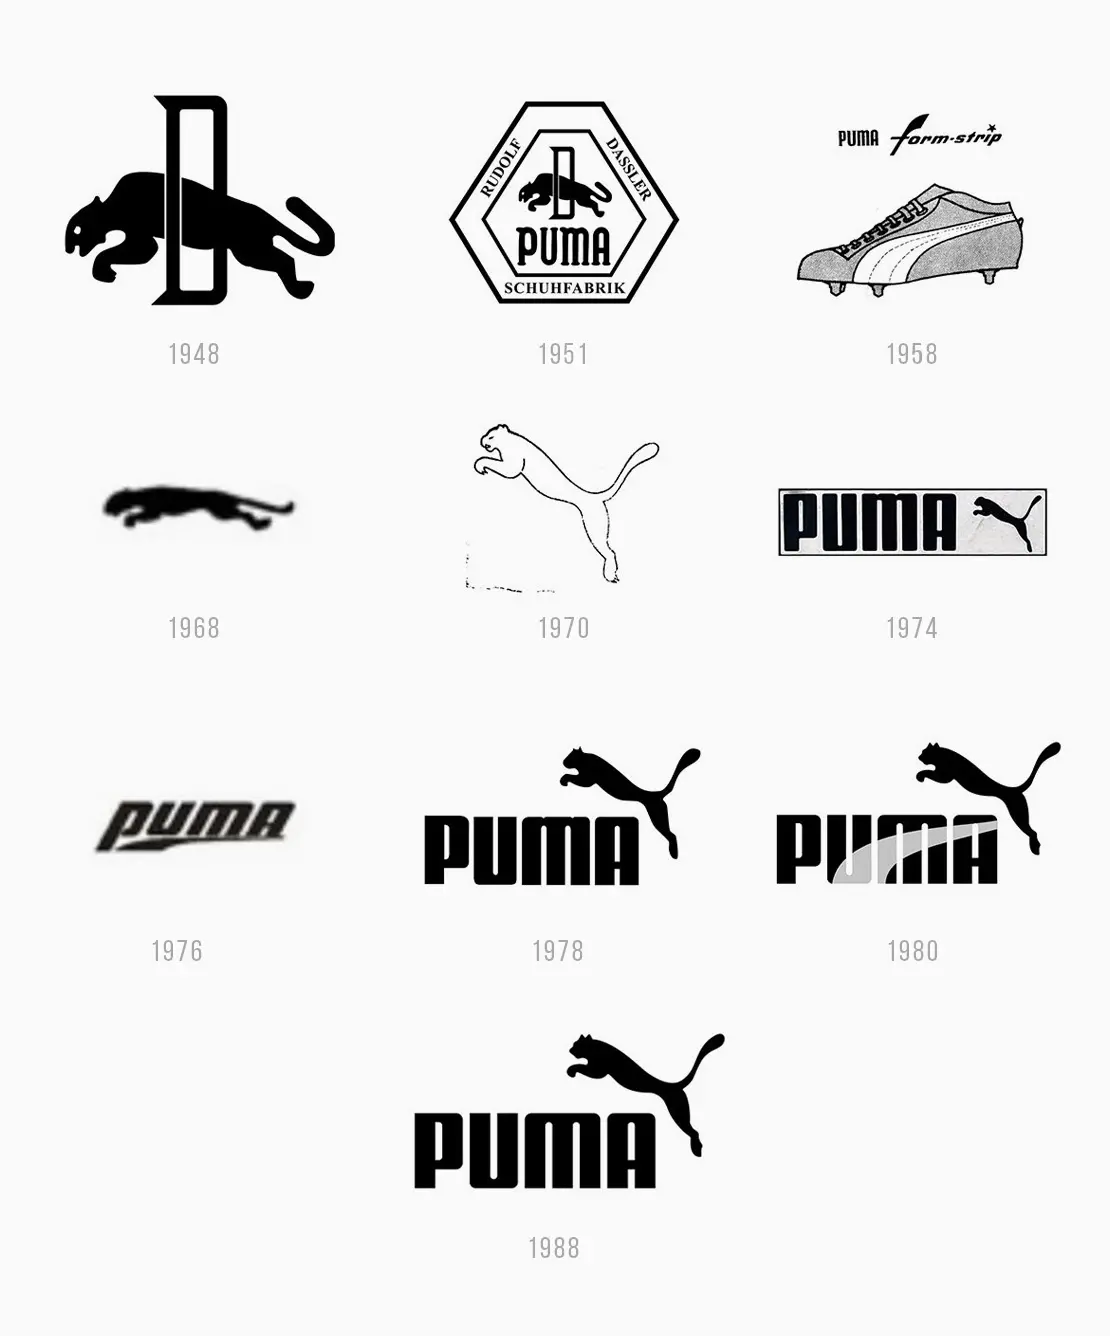 puma symbol meaning